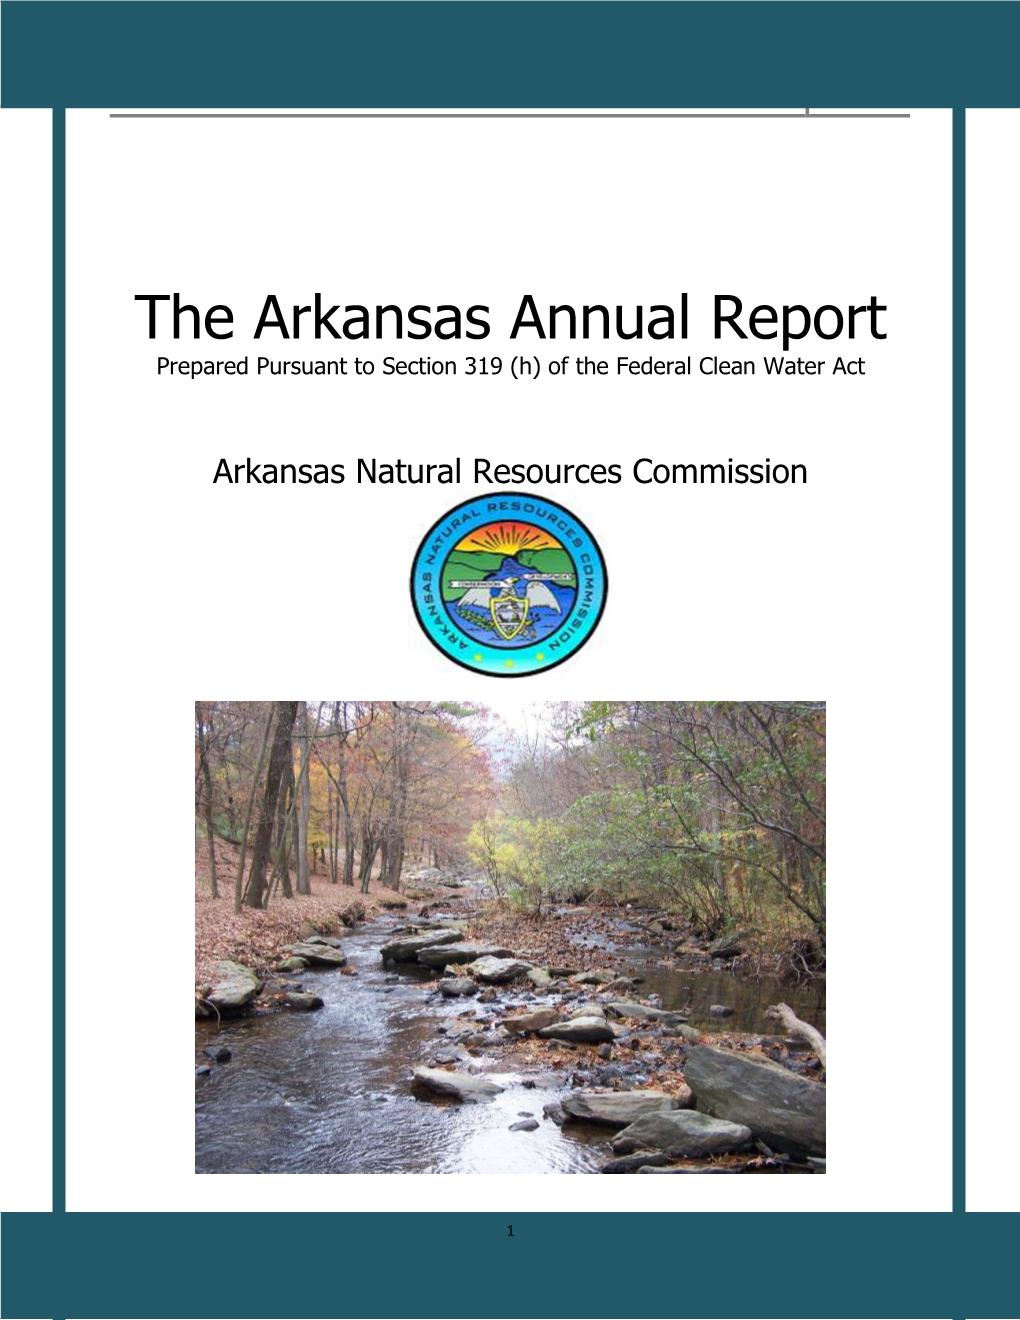 The Arkansas Annual Report 2014